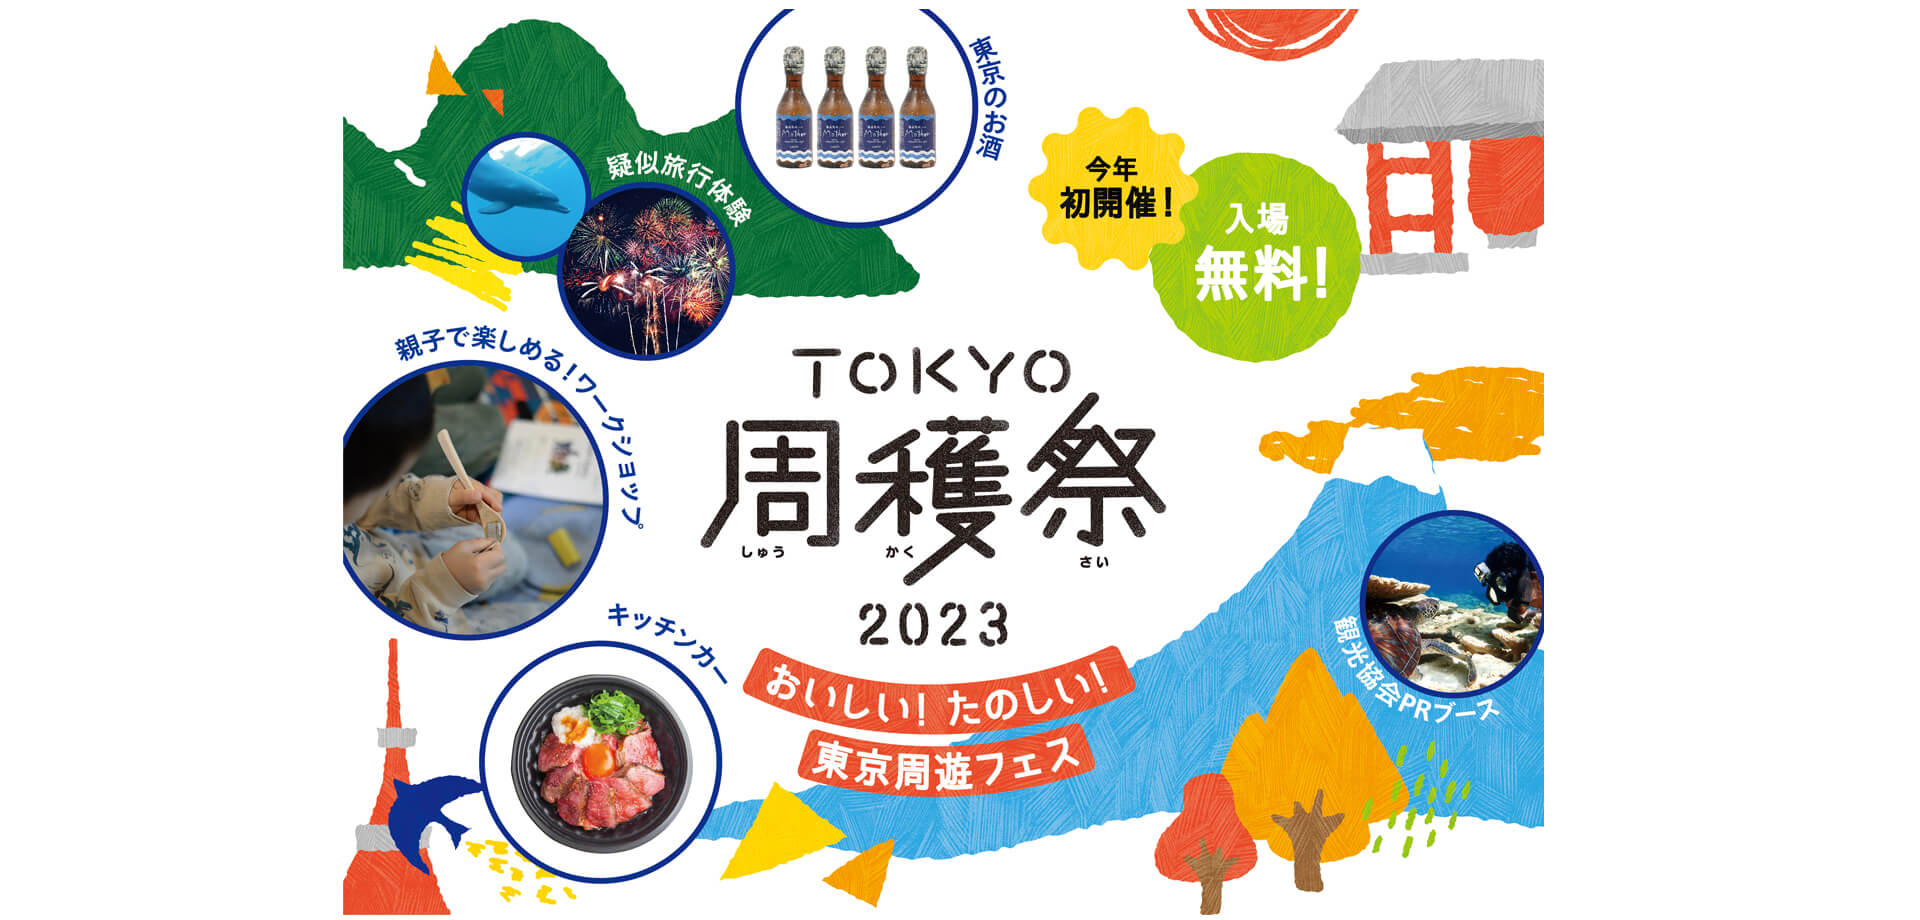 TOKYO周穫祭2023バナー